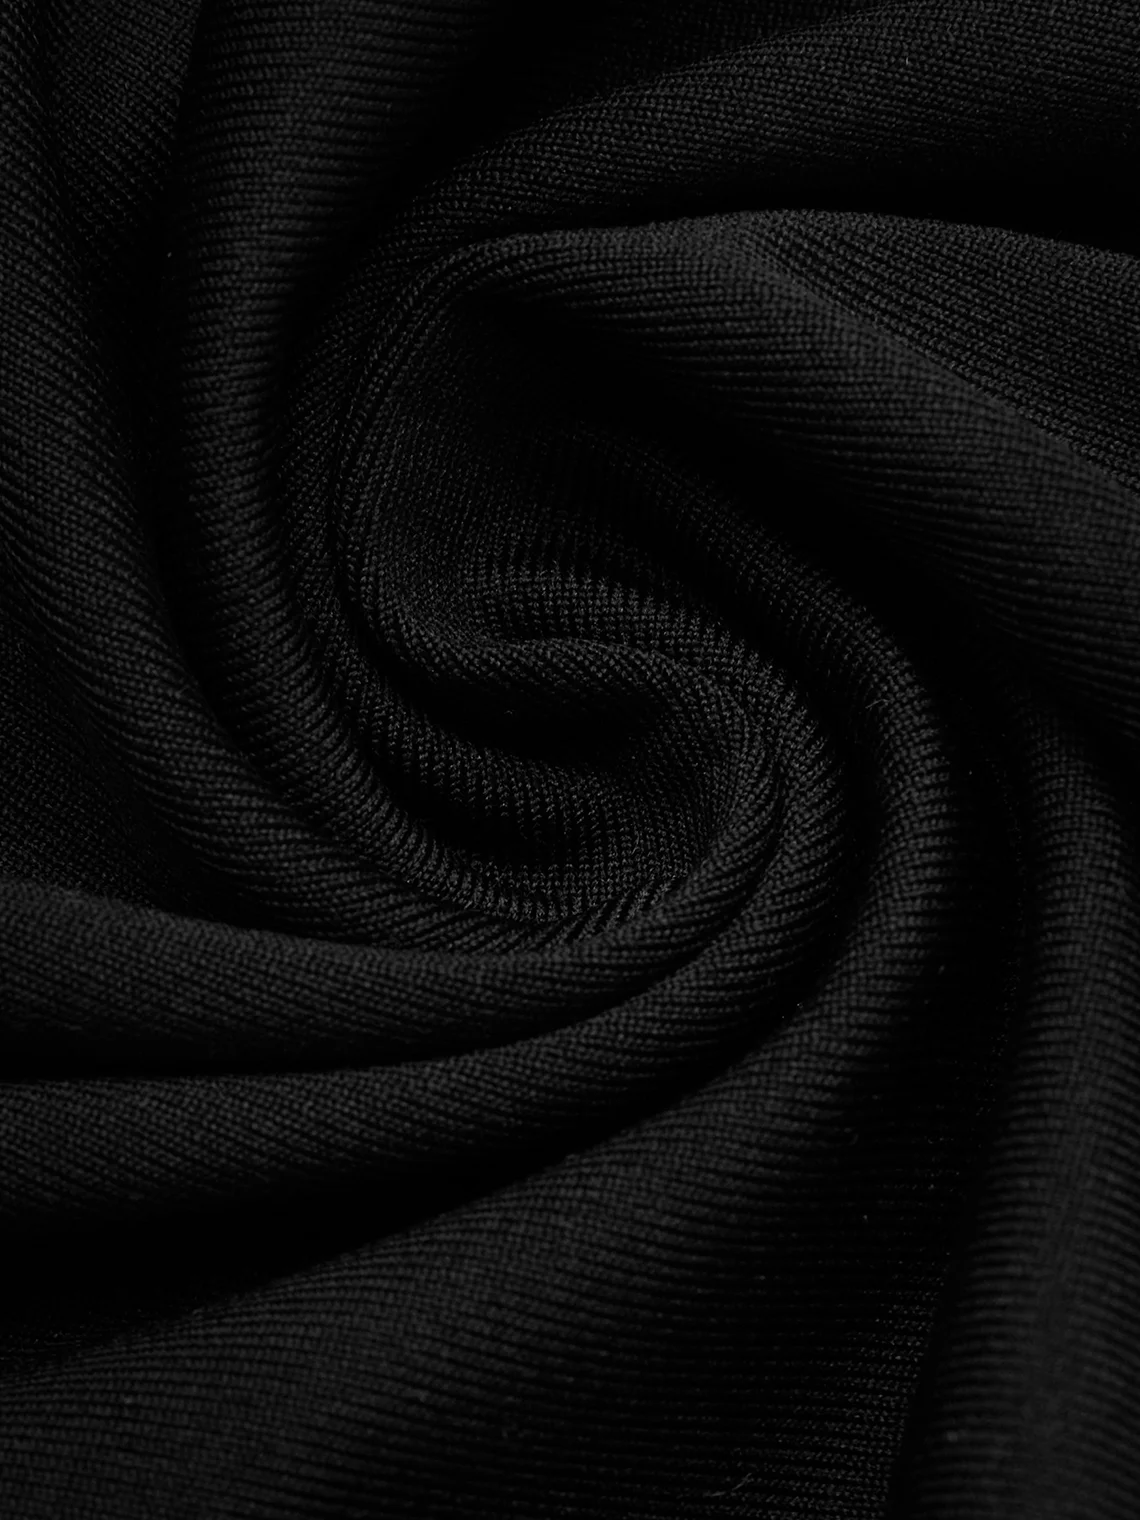 【Final Sale】Street Black Side Slit Lace Up Asymmetrical Design Dress Midi Dress